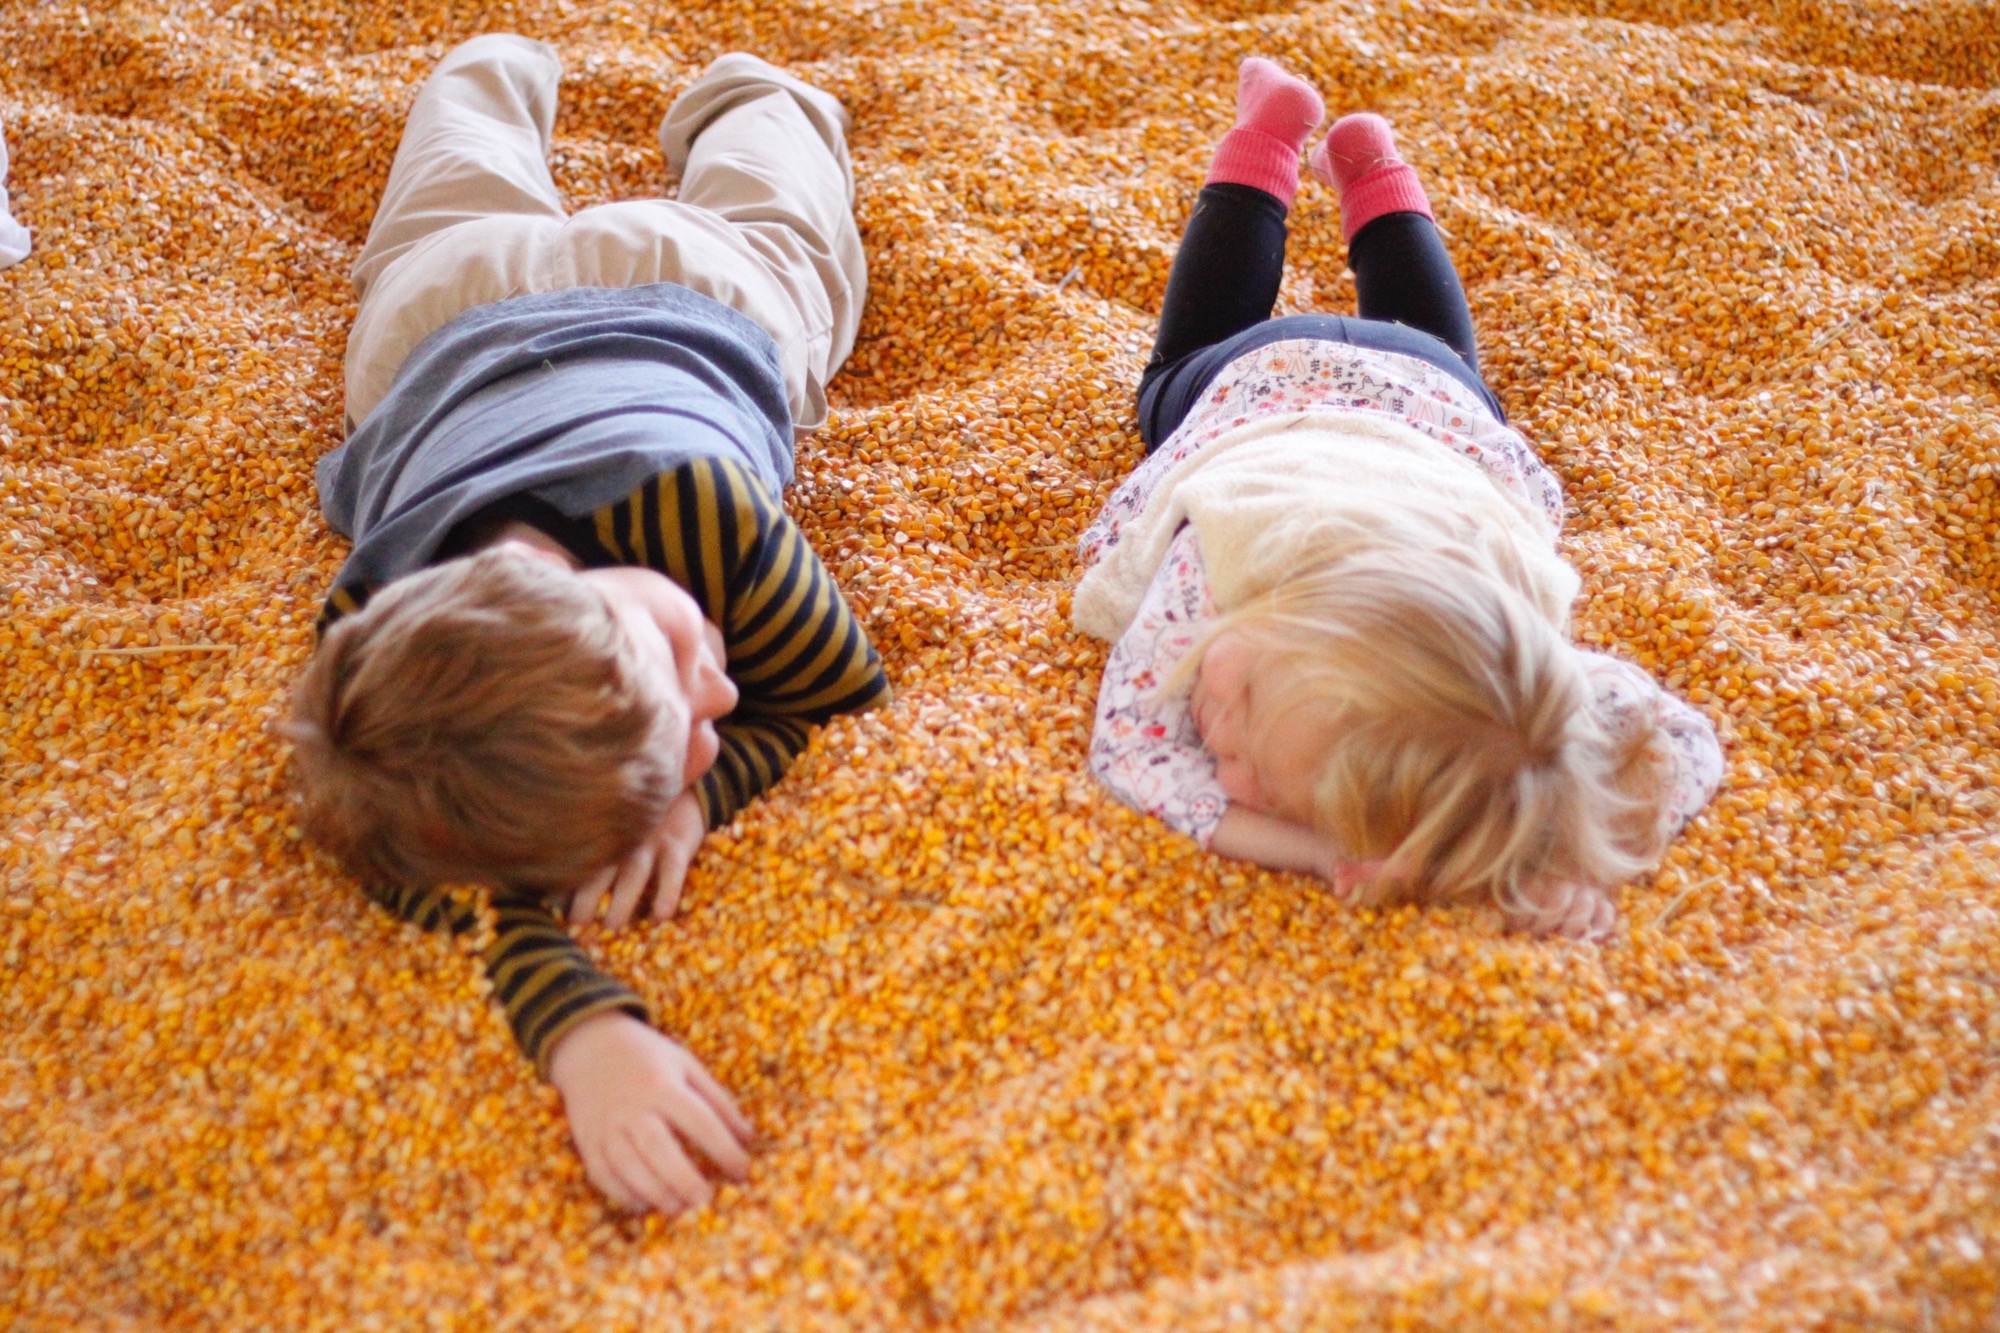 Kids at the pumpkin patch